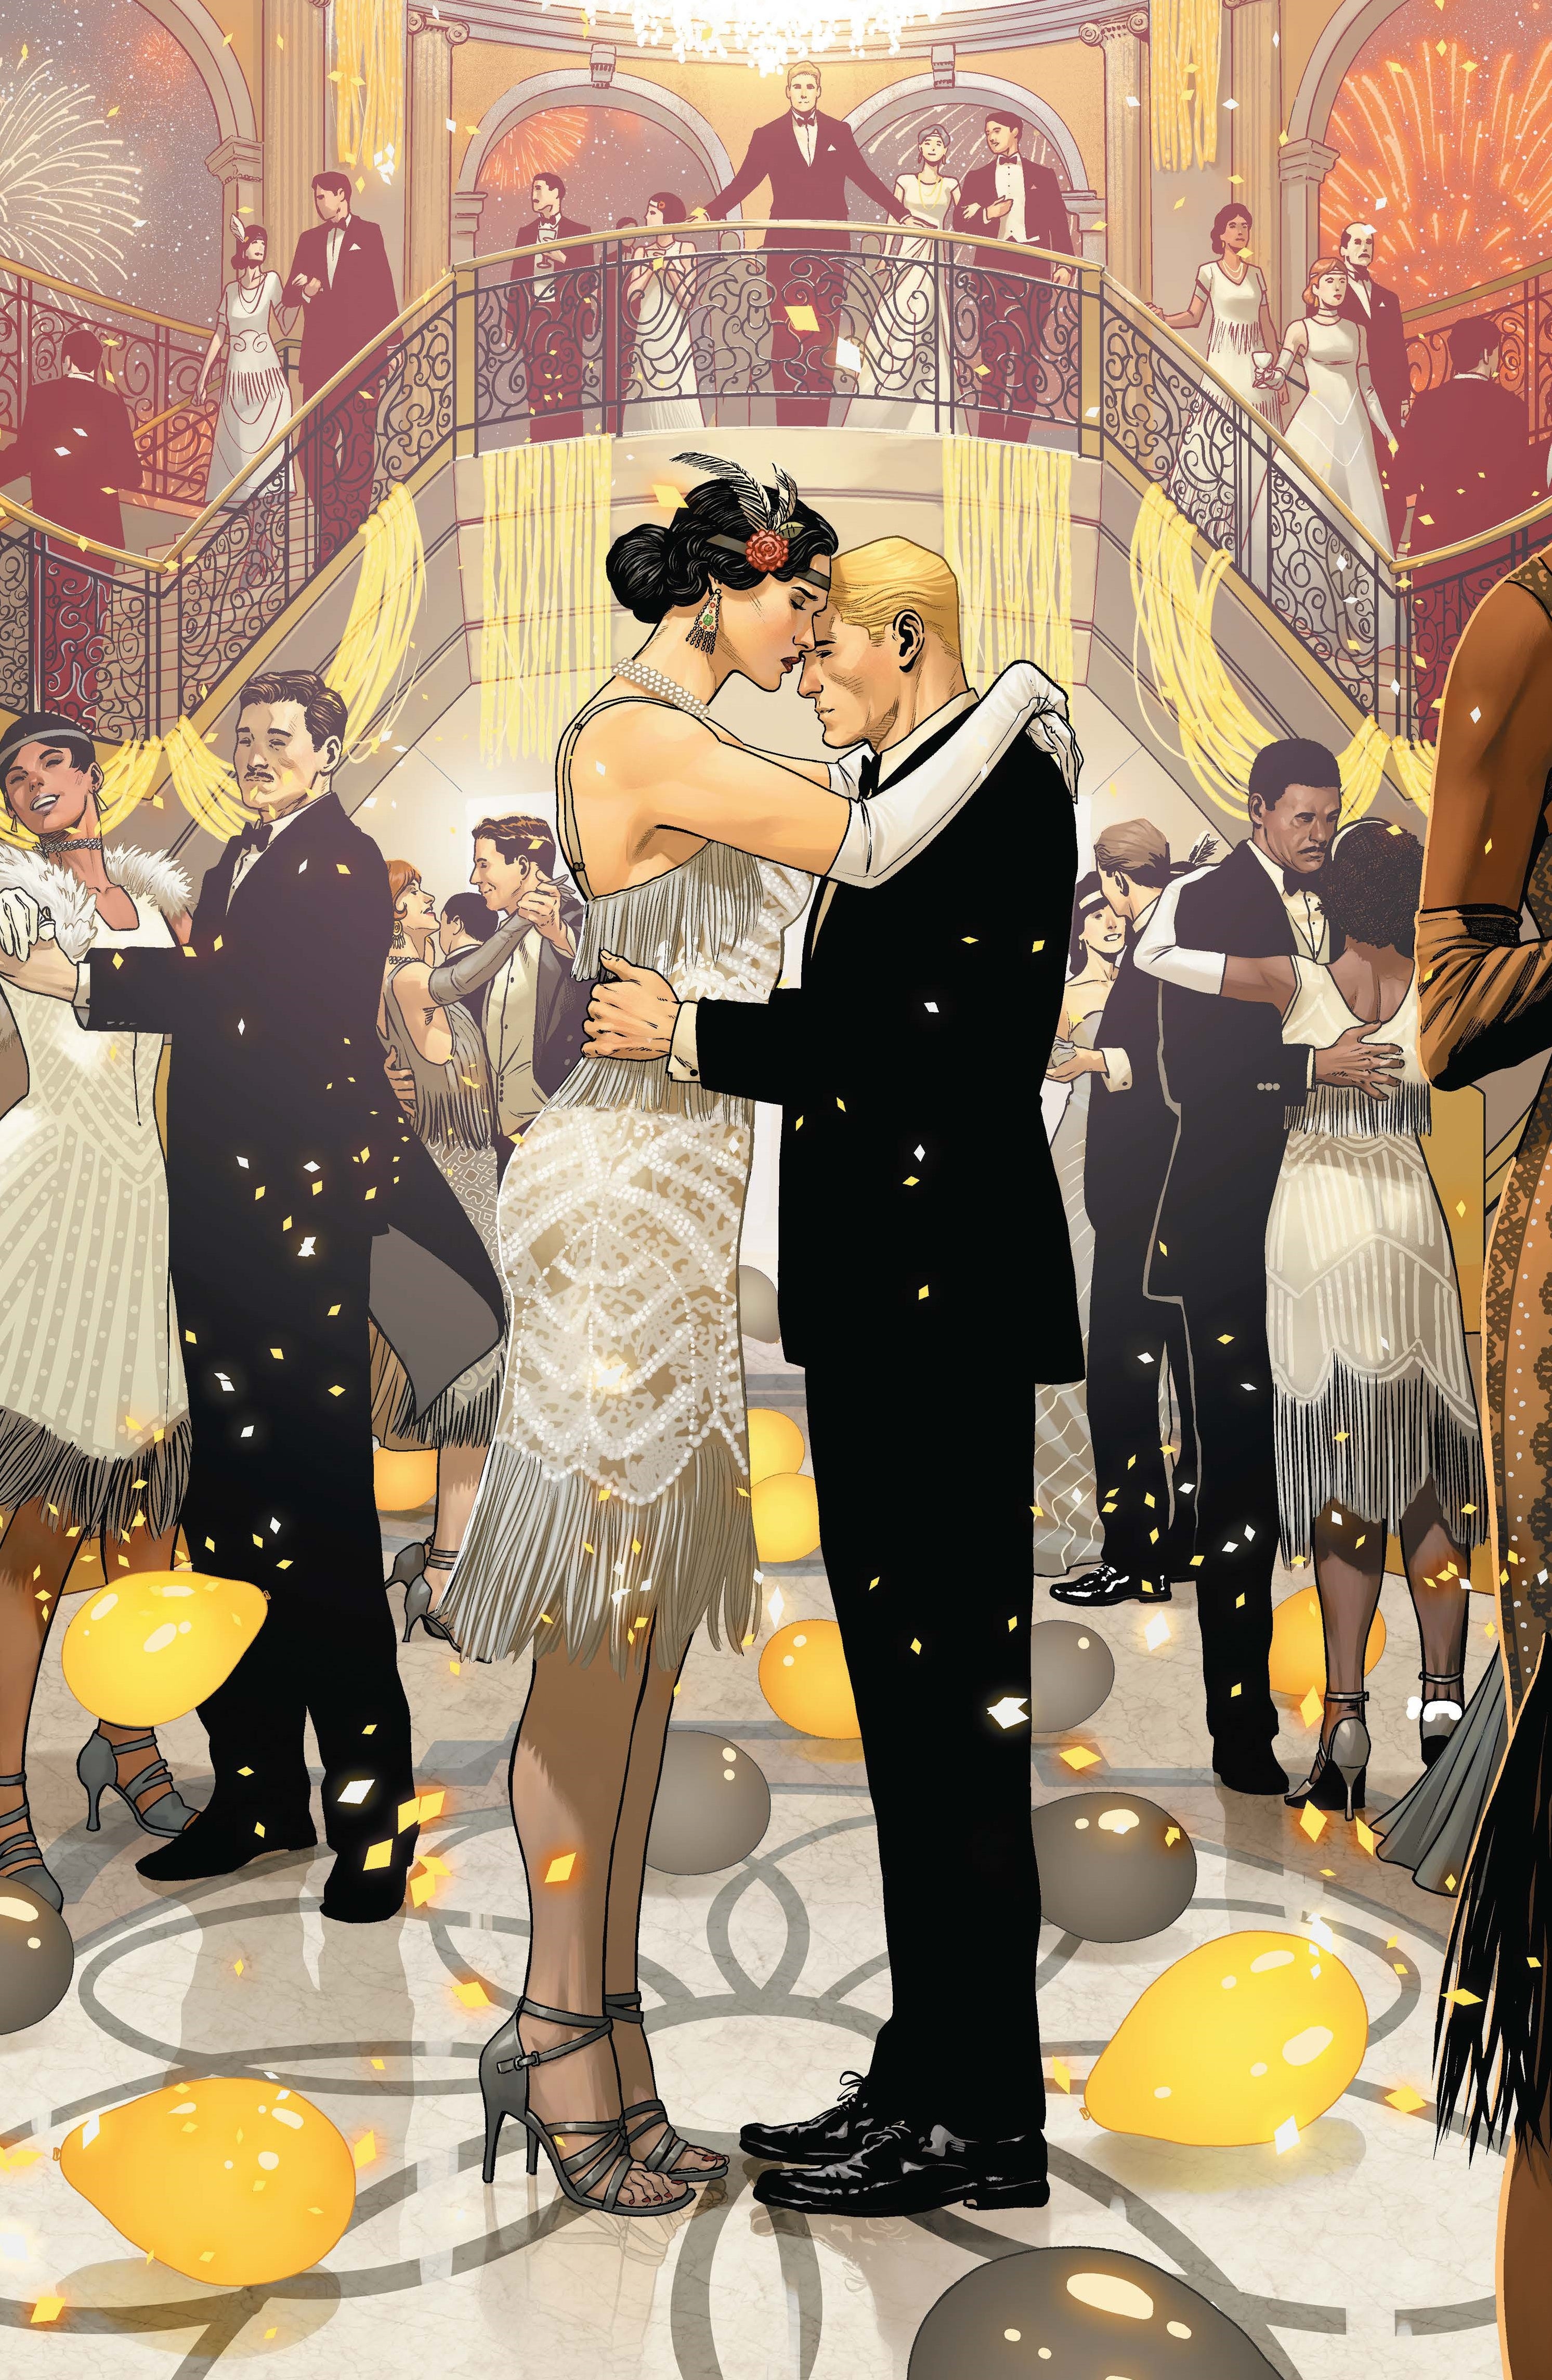 Wonder Woman dances at a ball with Steve Trevor